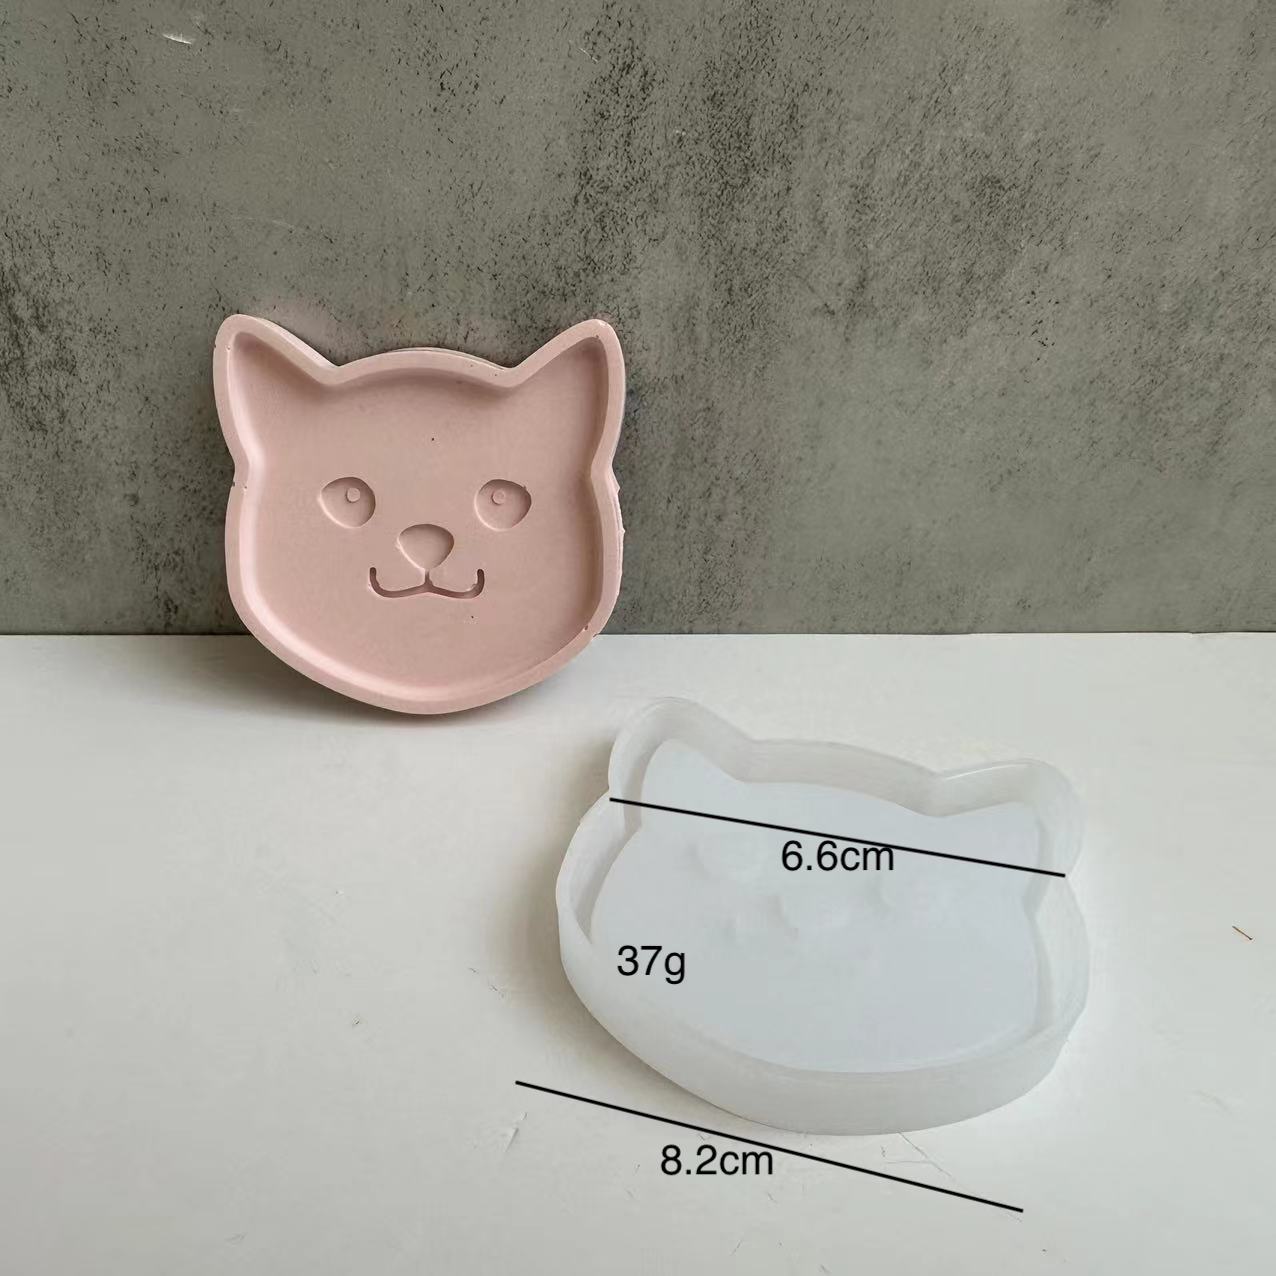 Cat Shaped Tray Mold 貓咪頭部托盤模具